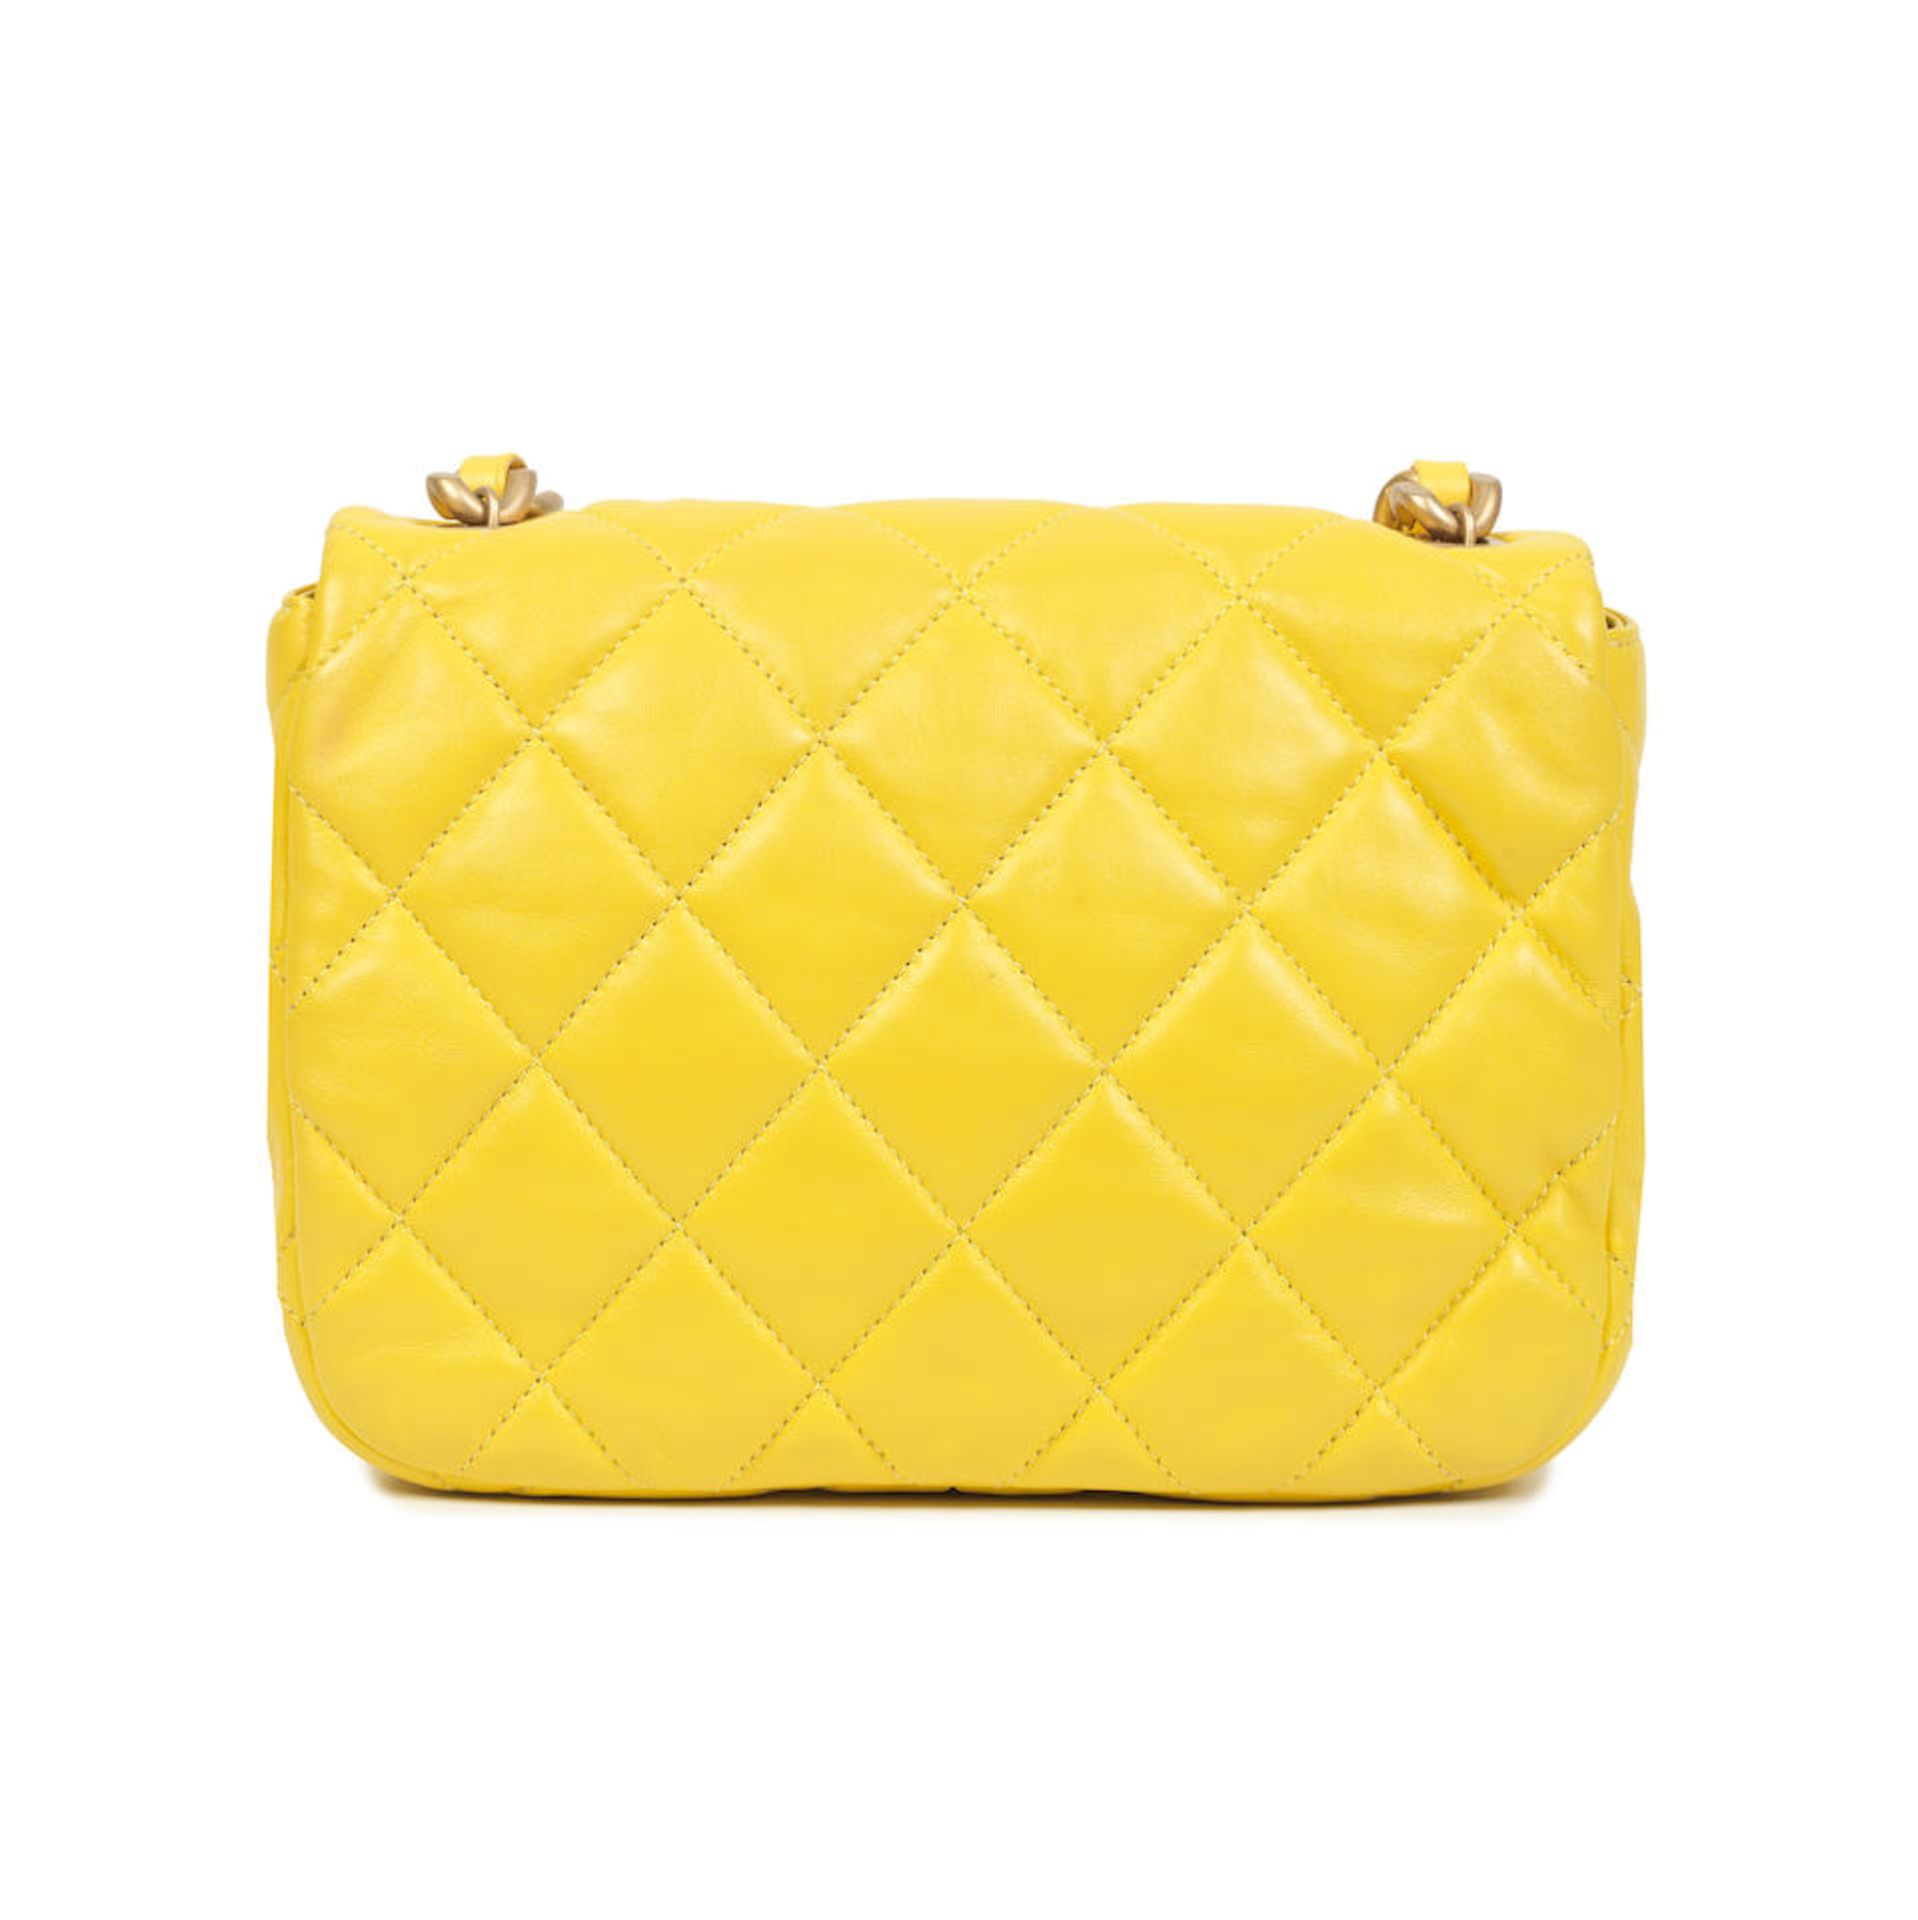 Virginie Viard for Chanel: a Yellow Quilted Lambskin Mini Flap Bag Spring/Summer 2022 - Bild 3 aus 3